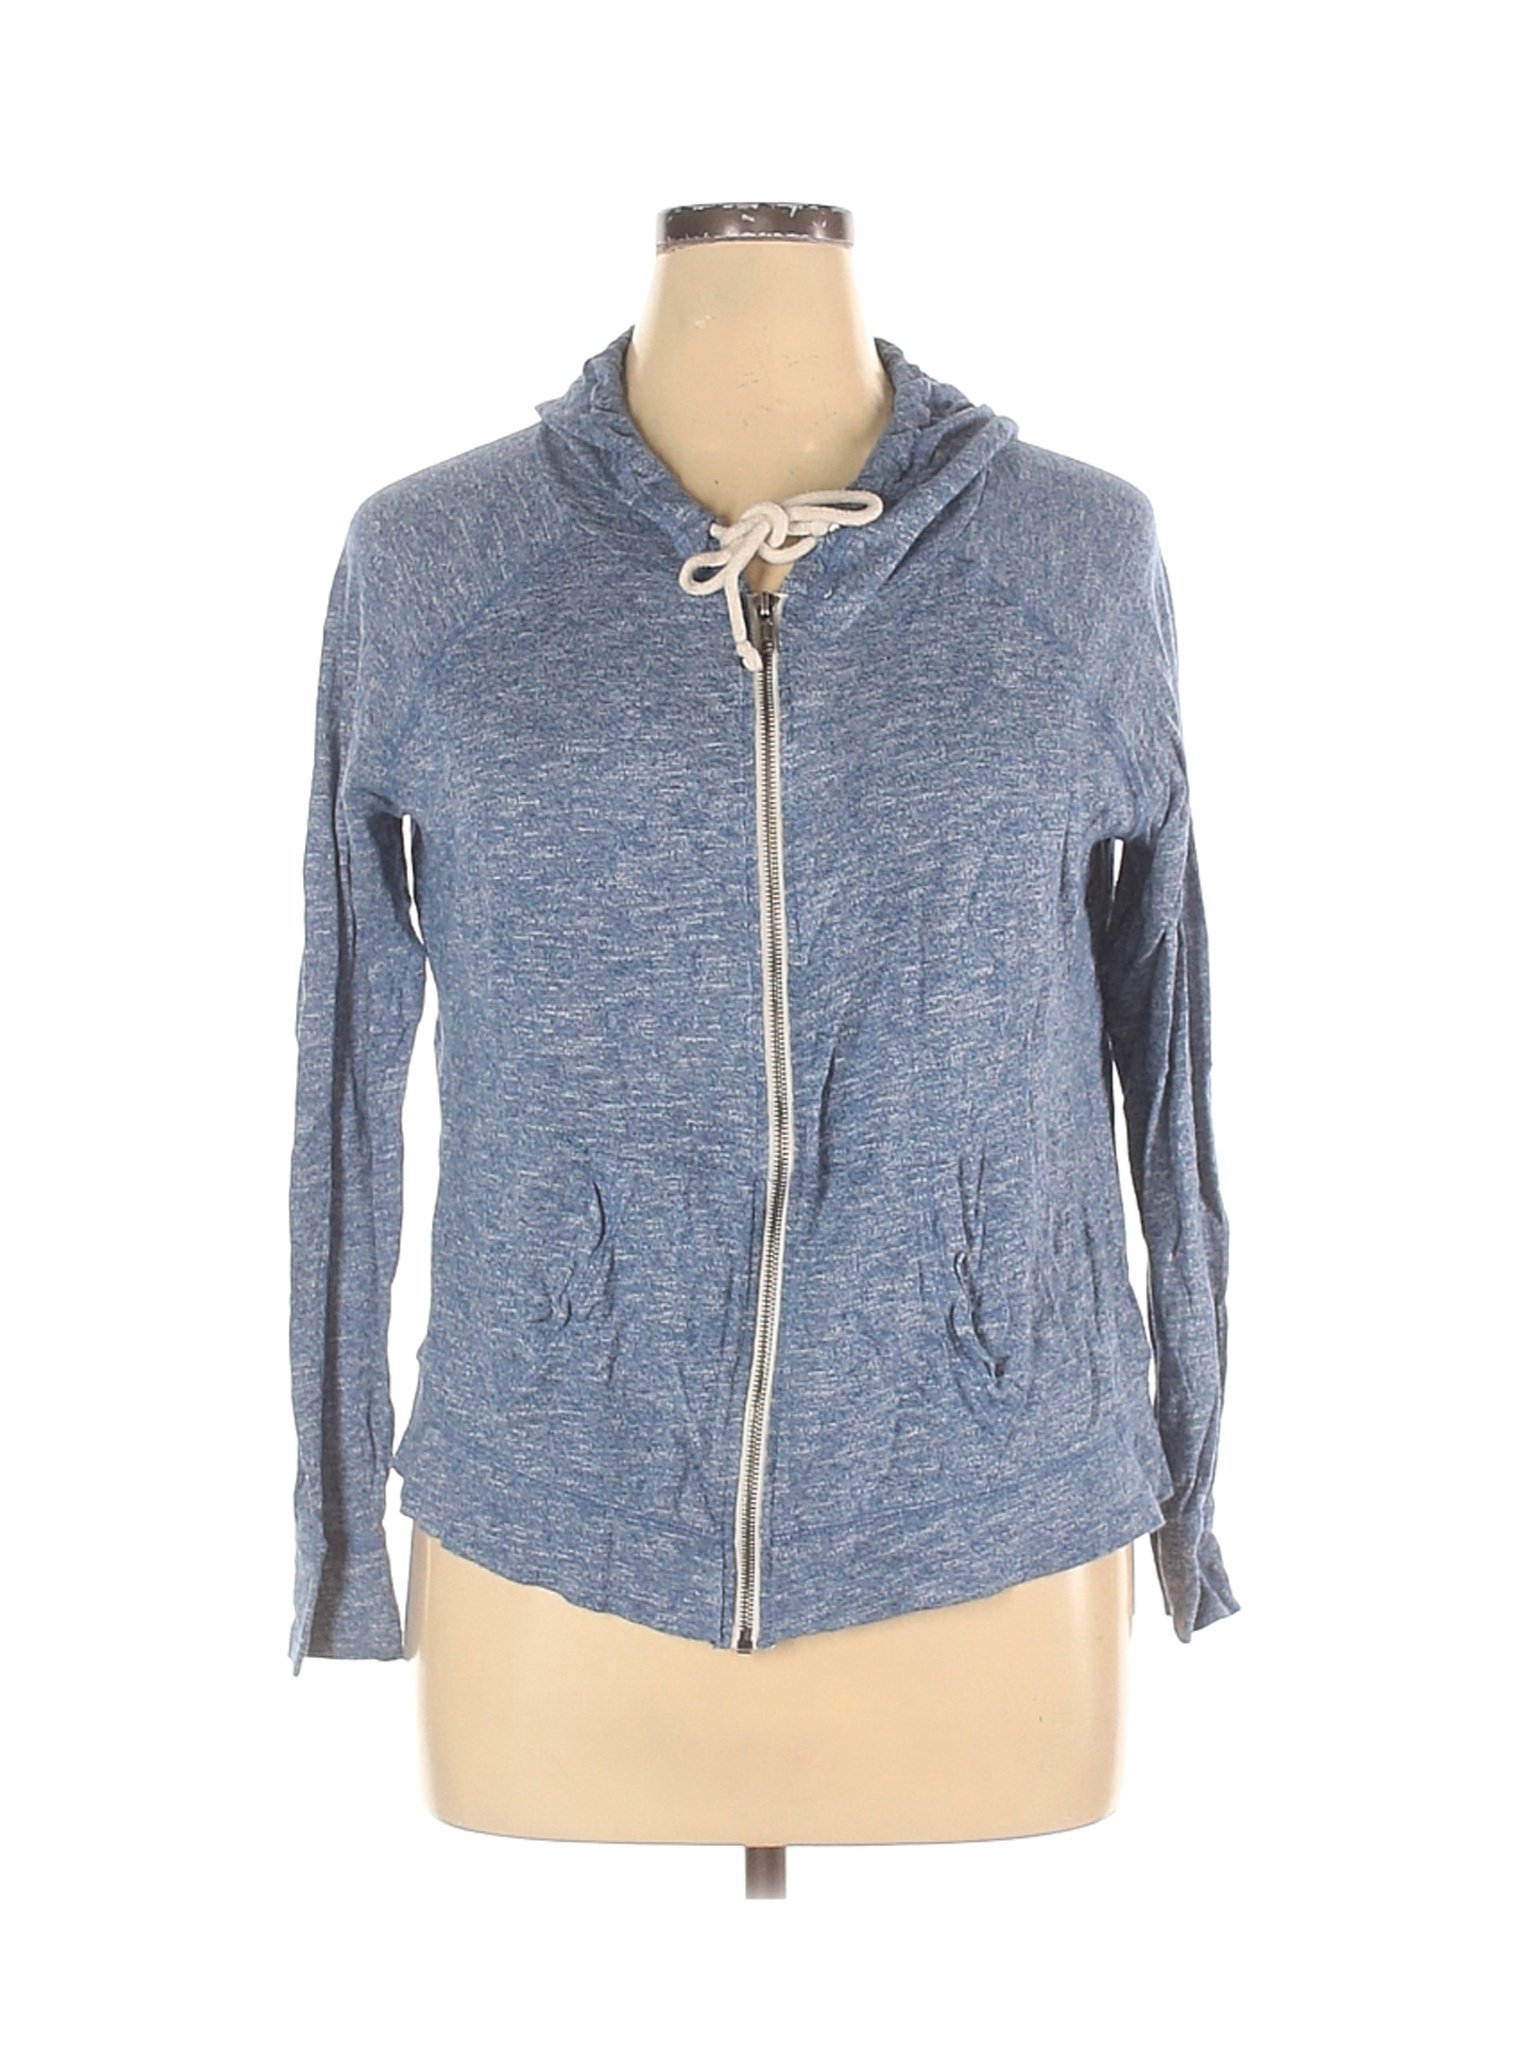 Mossimo Supply Co. Women Blue Zip Up Hoodie XL | eBay